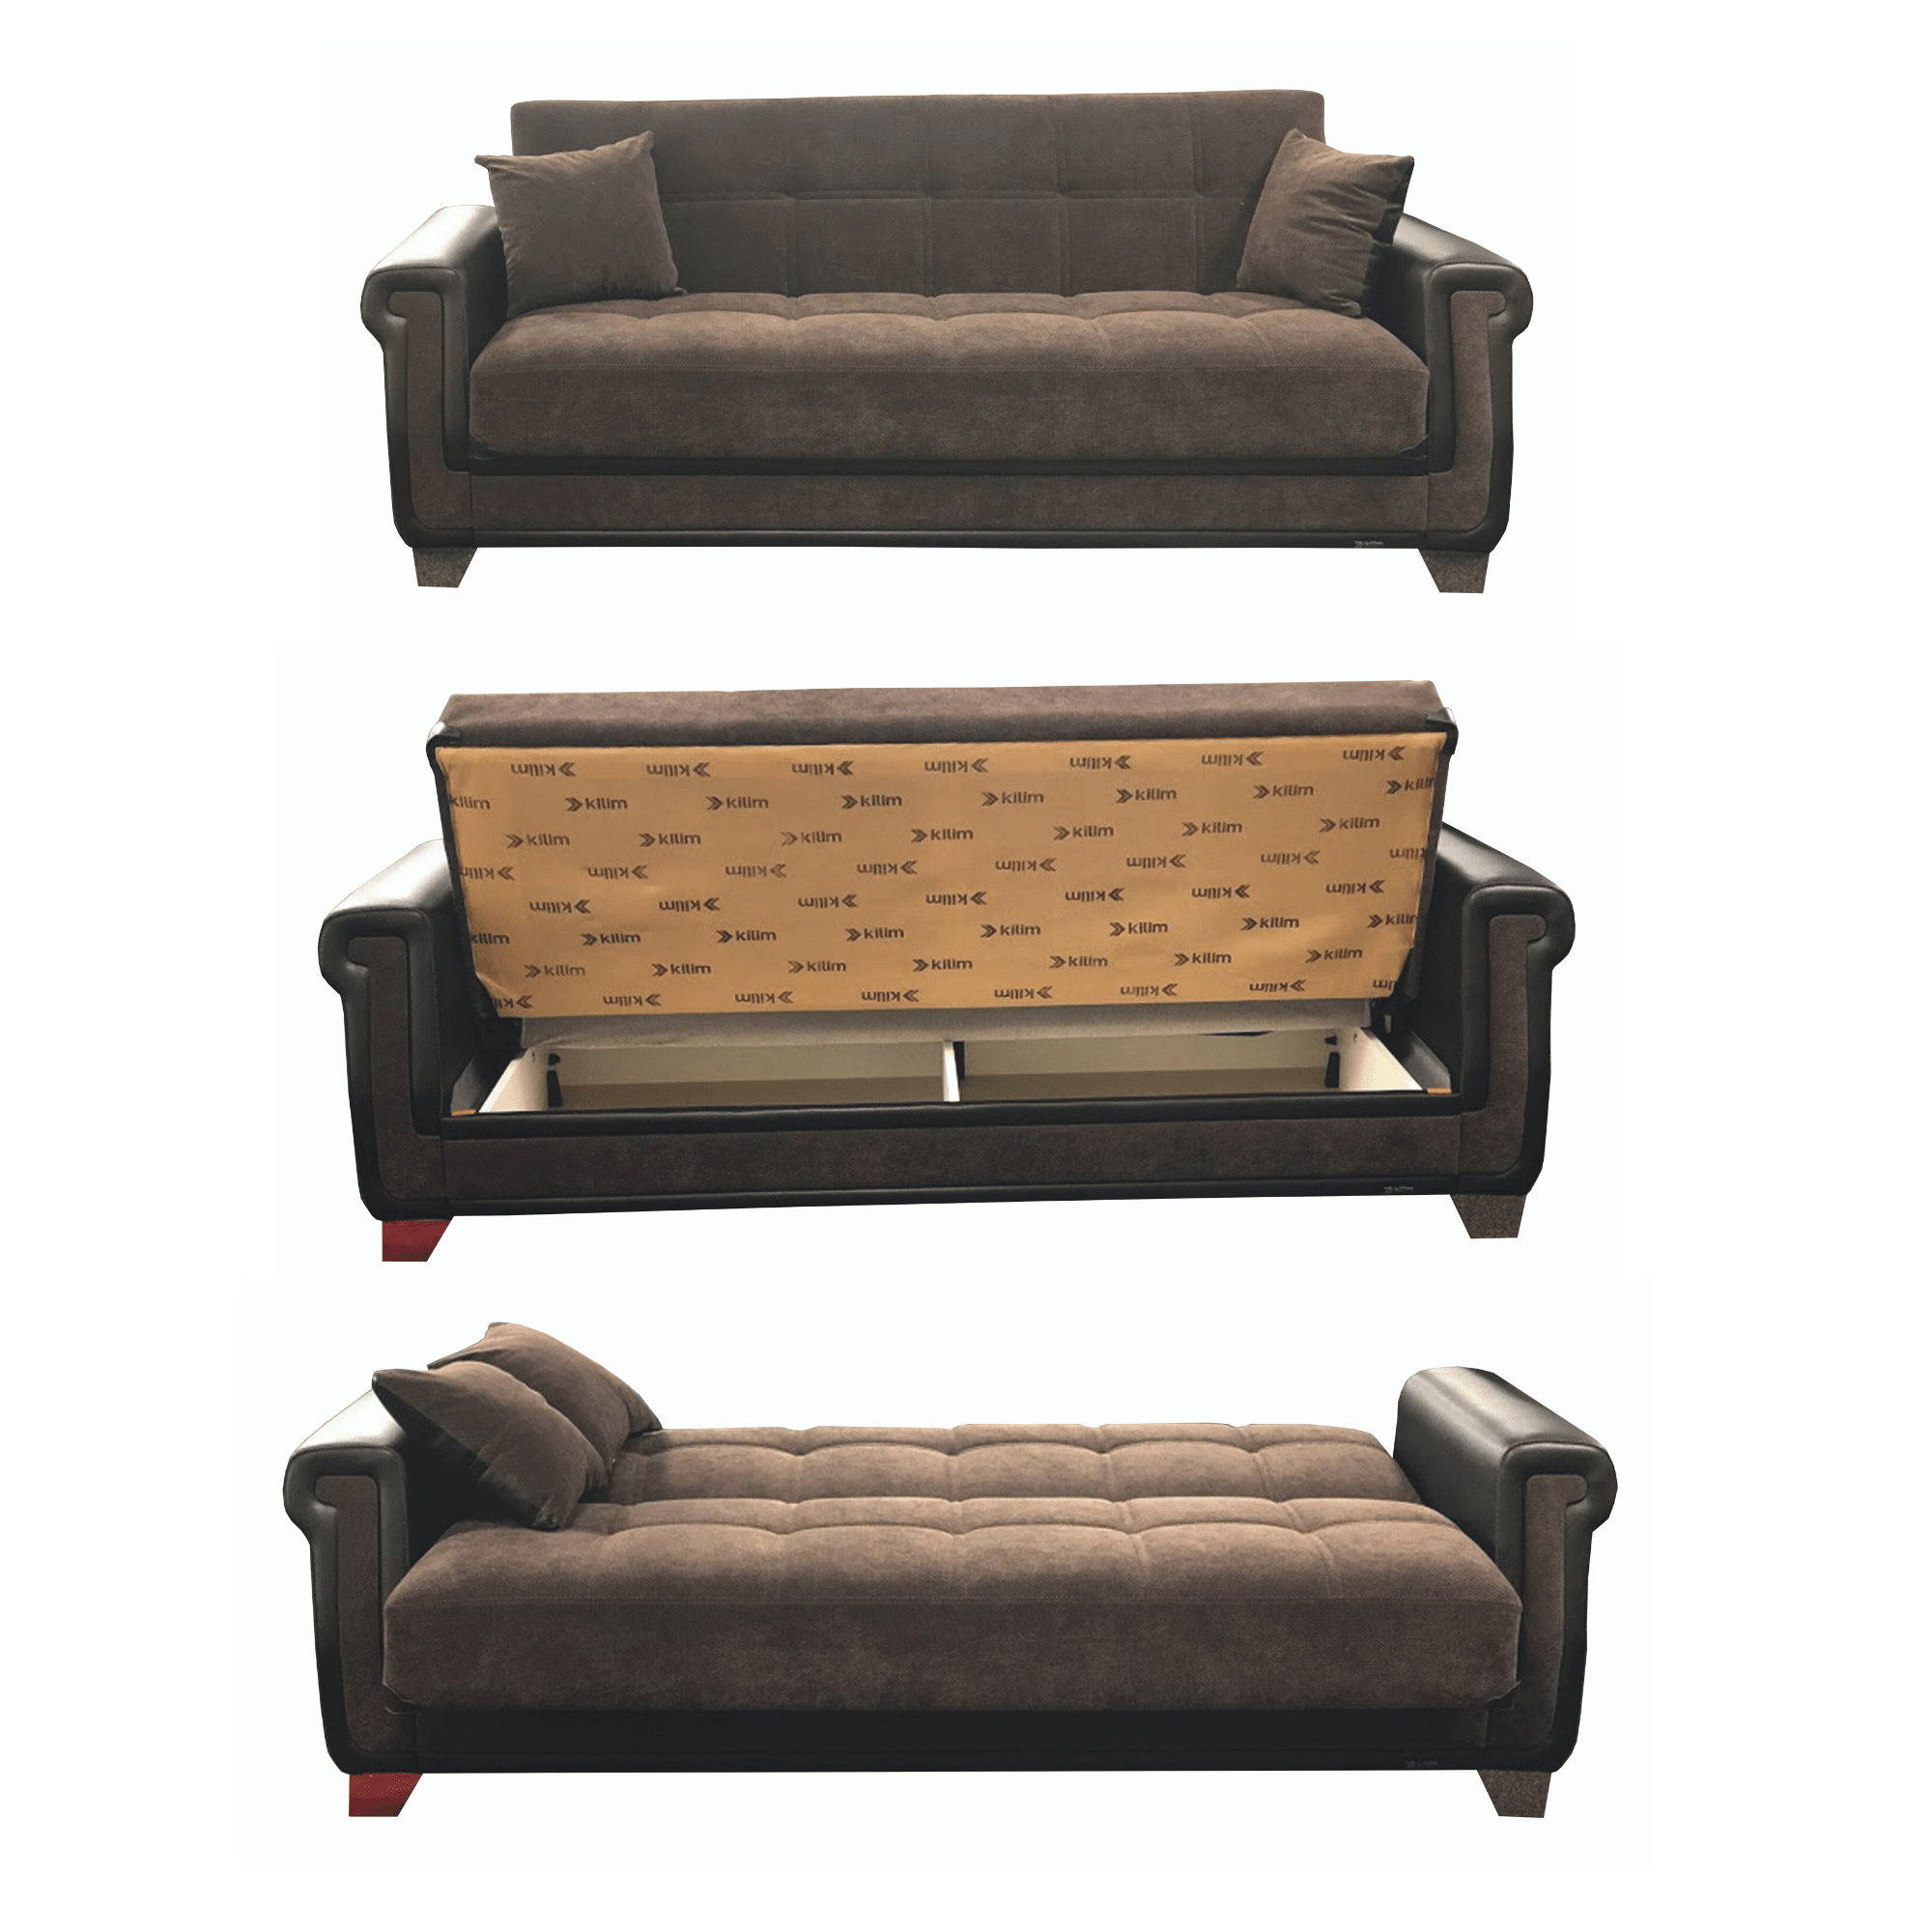 Proline Convertible Sleeper Sofa With